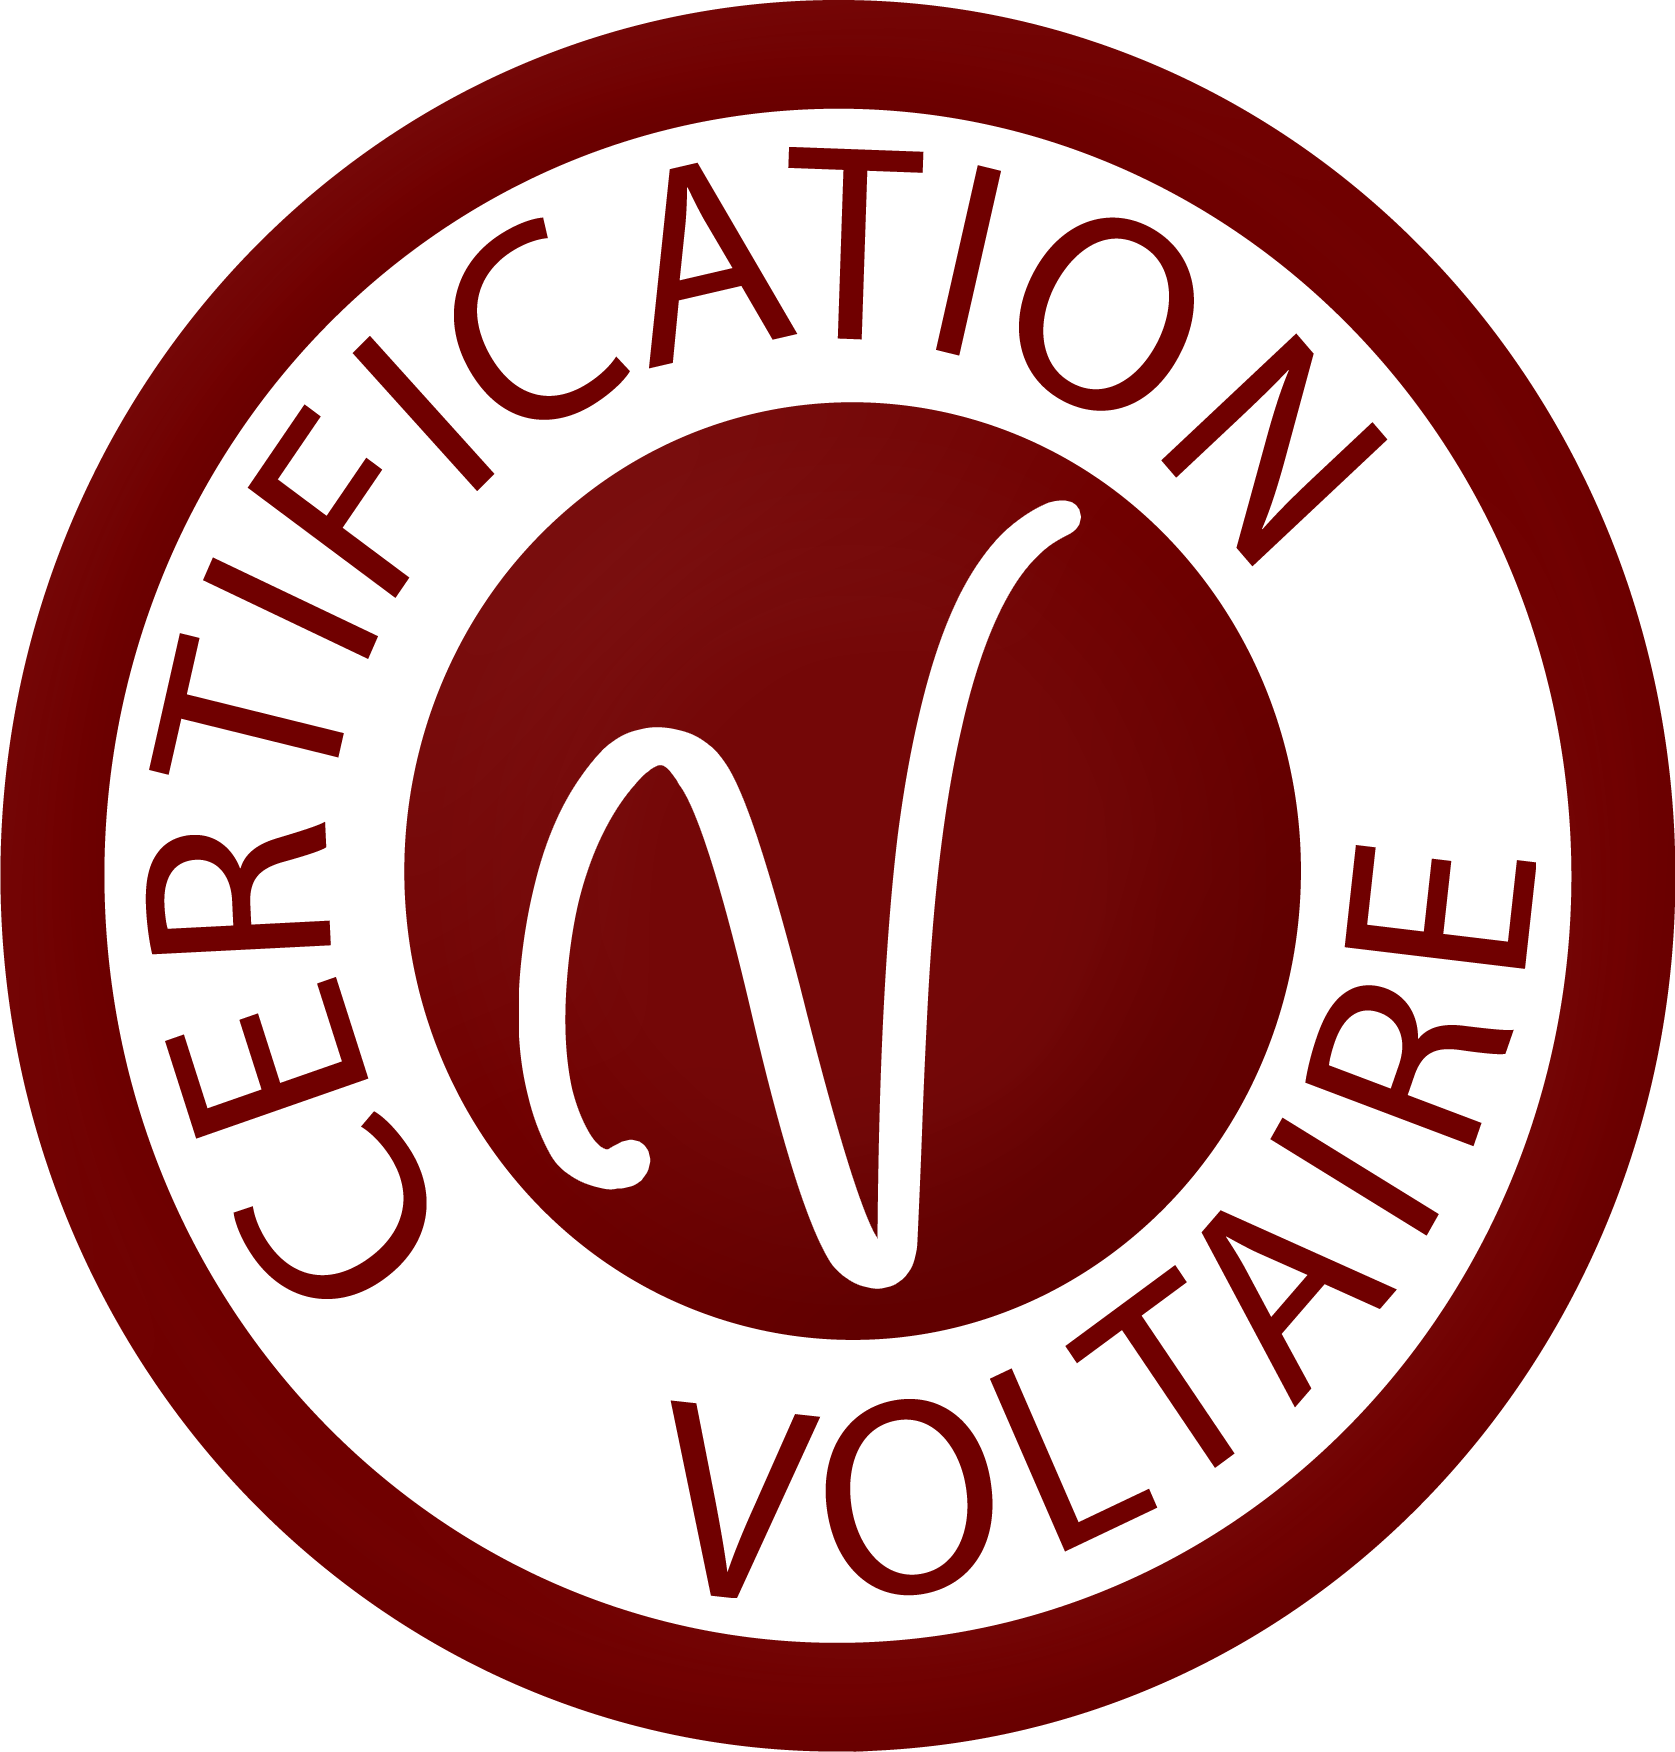 Logo de la certification